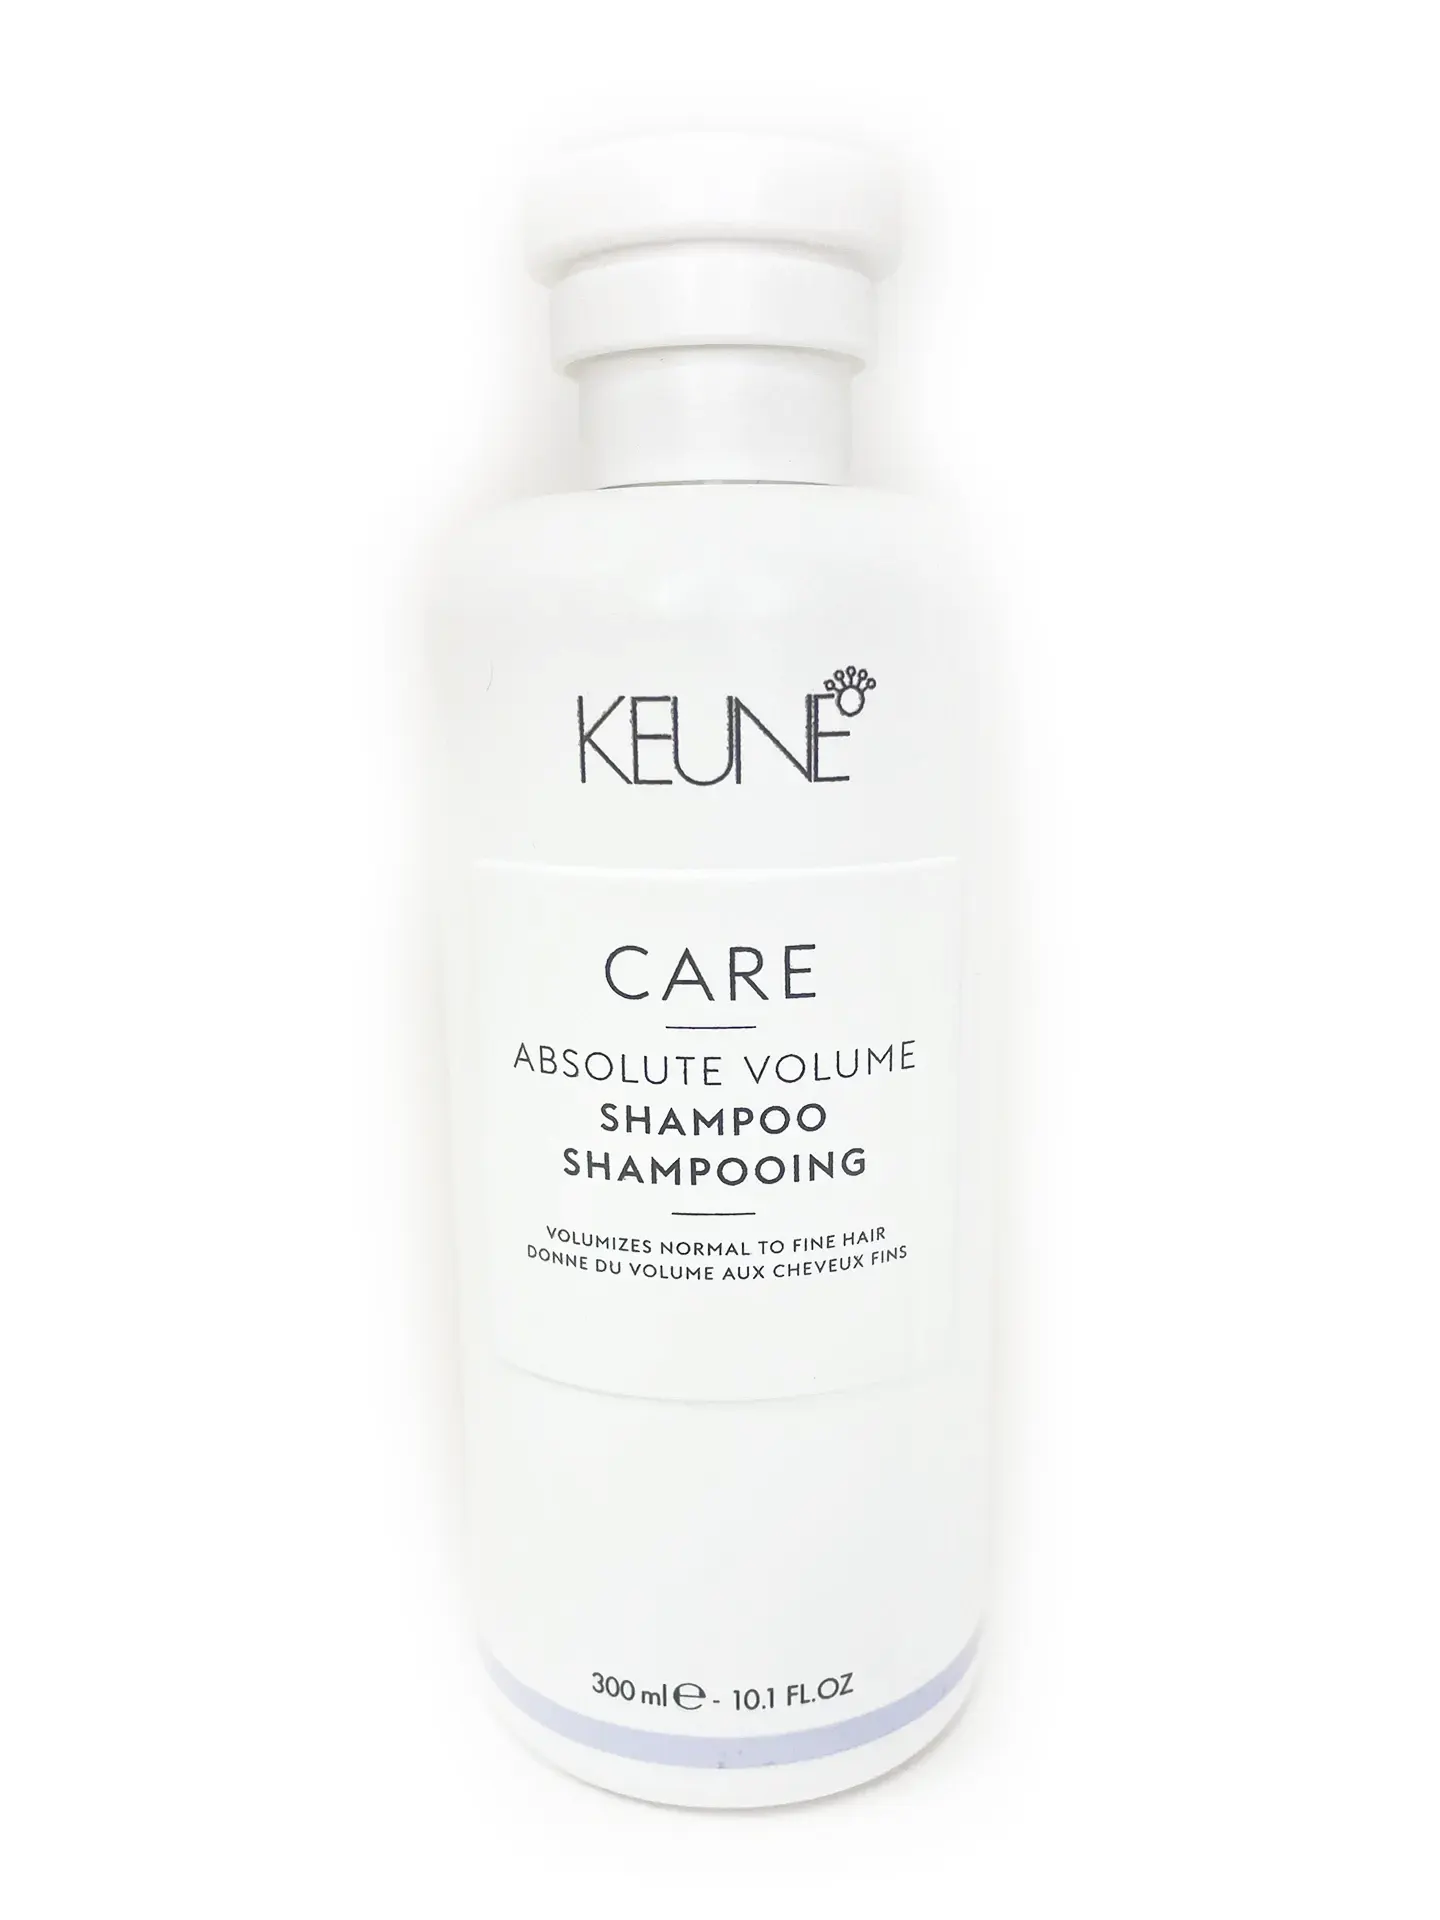 Keune Care Absolute Volume Shampoo 300ml Kroll Salon, Allentown PA